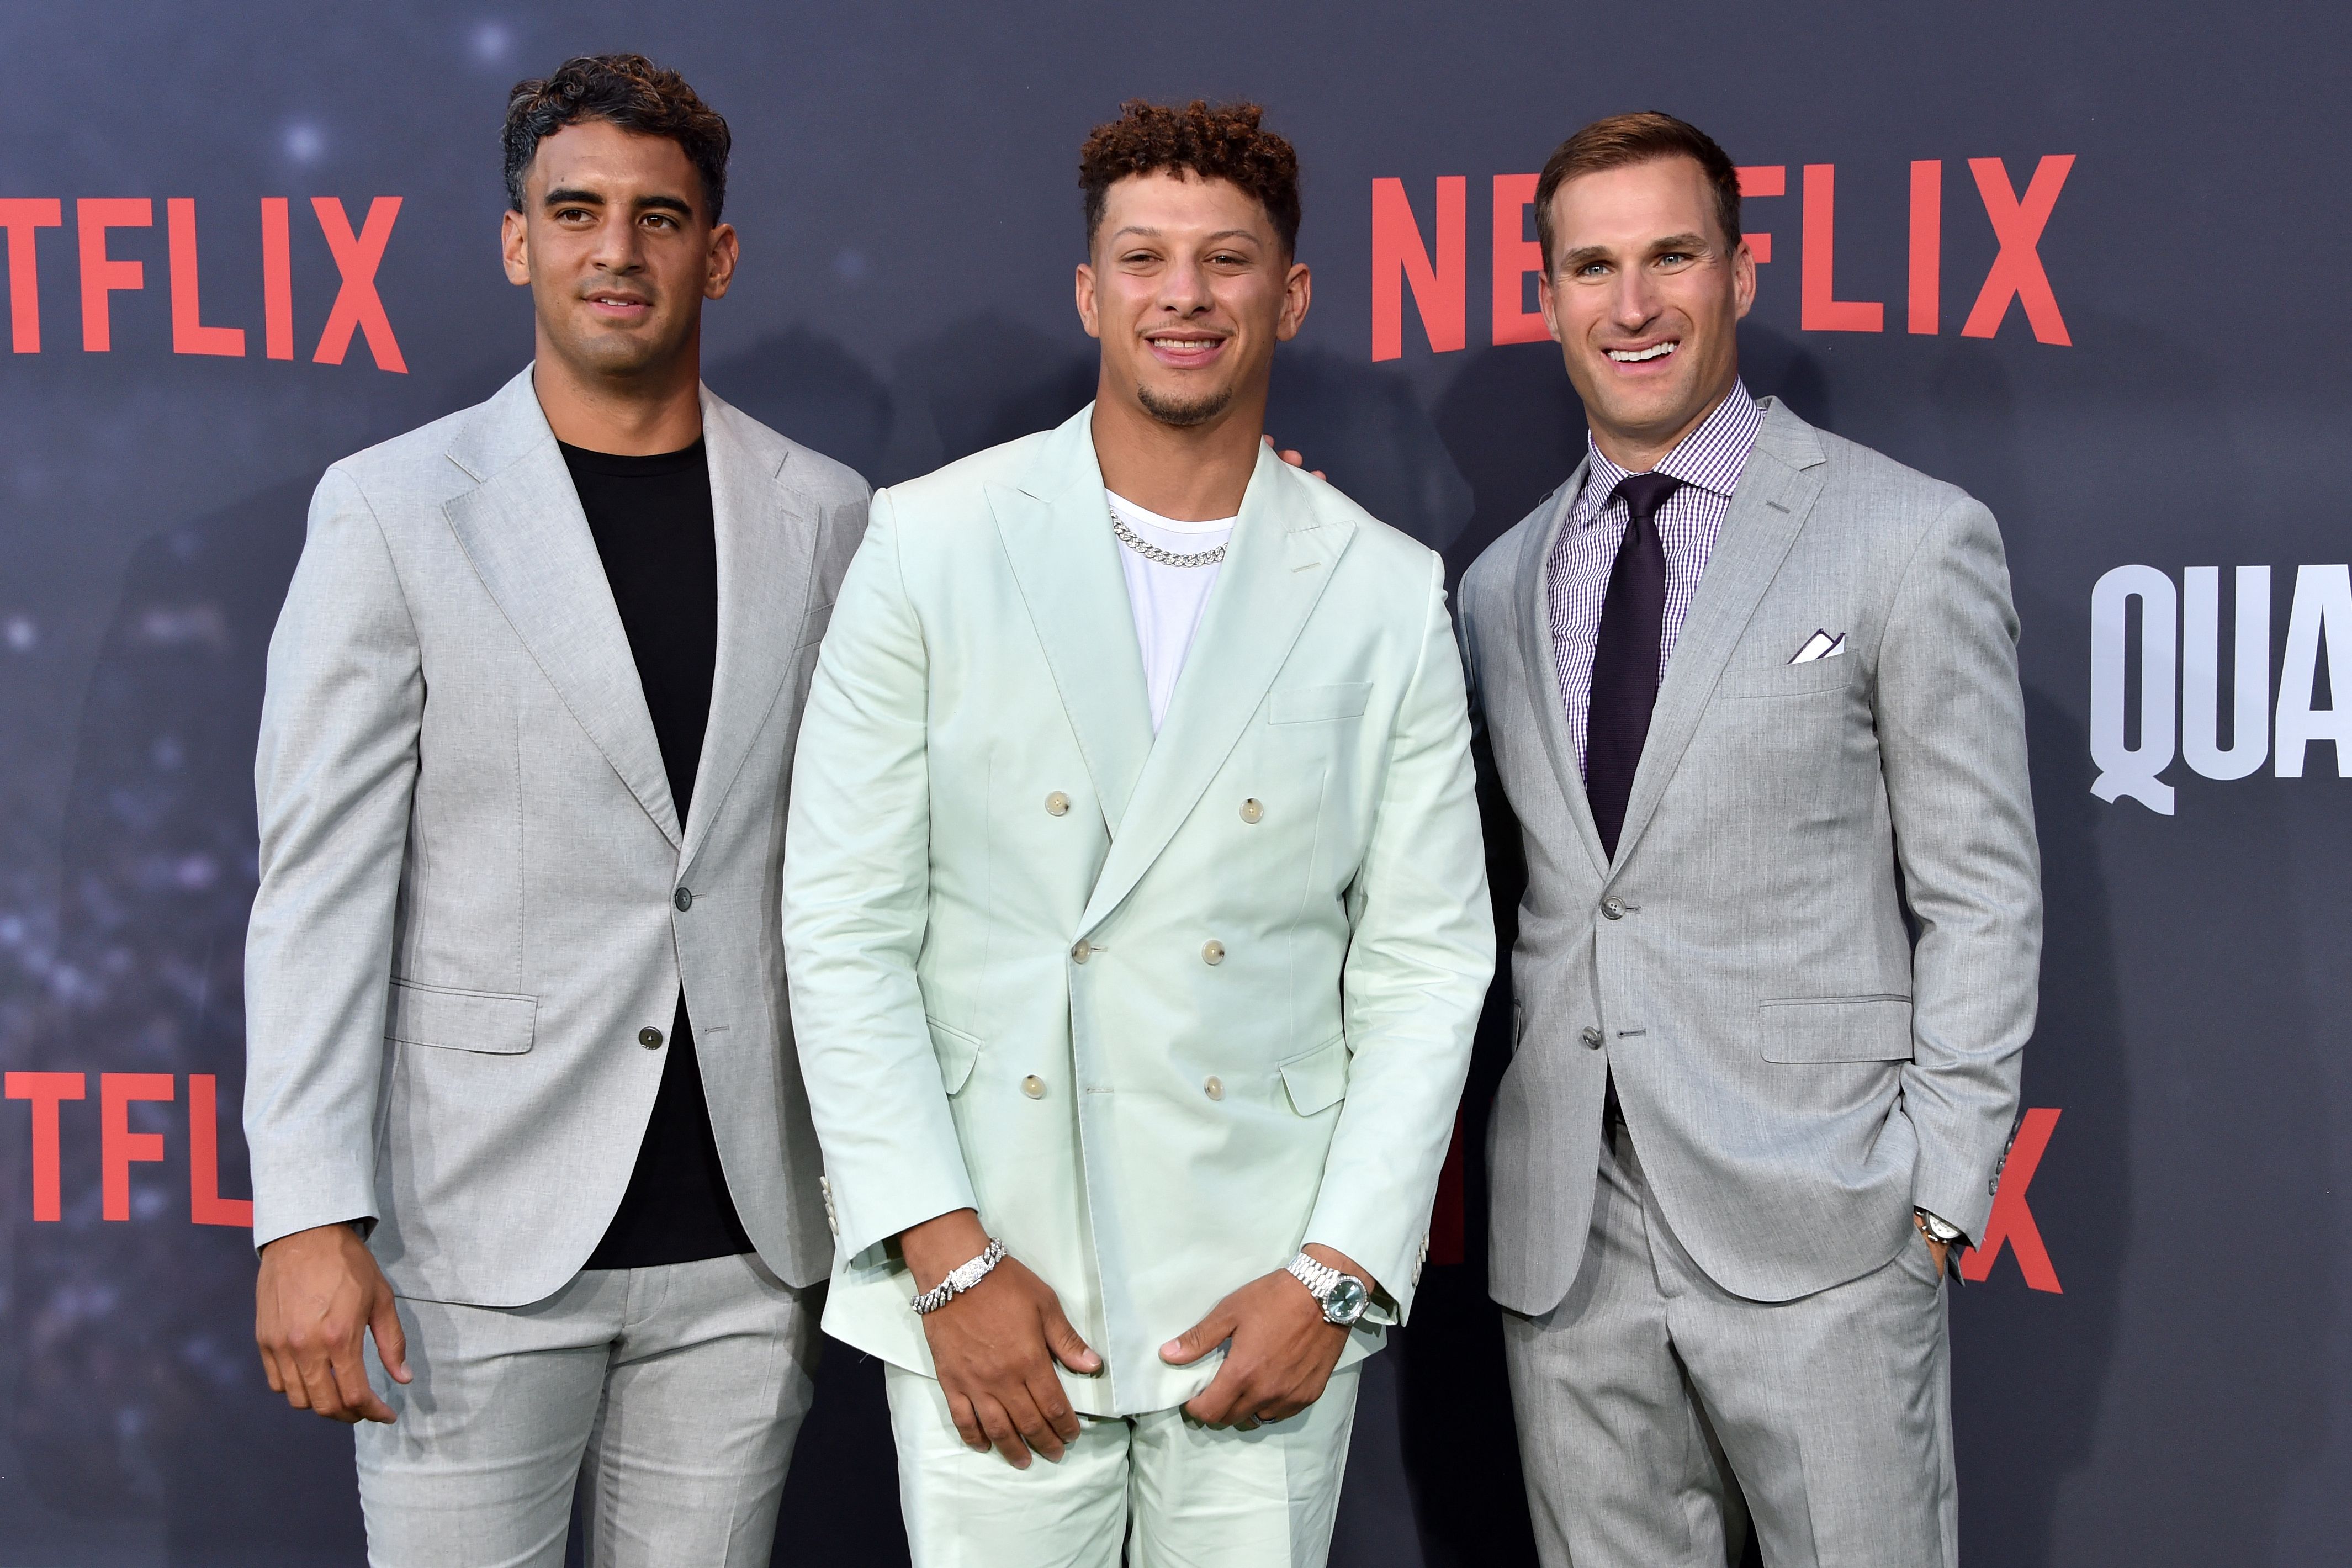 5 players we'd love to see on Netflix's Quarterback next season